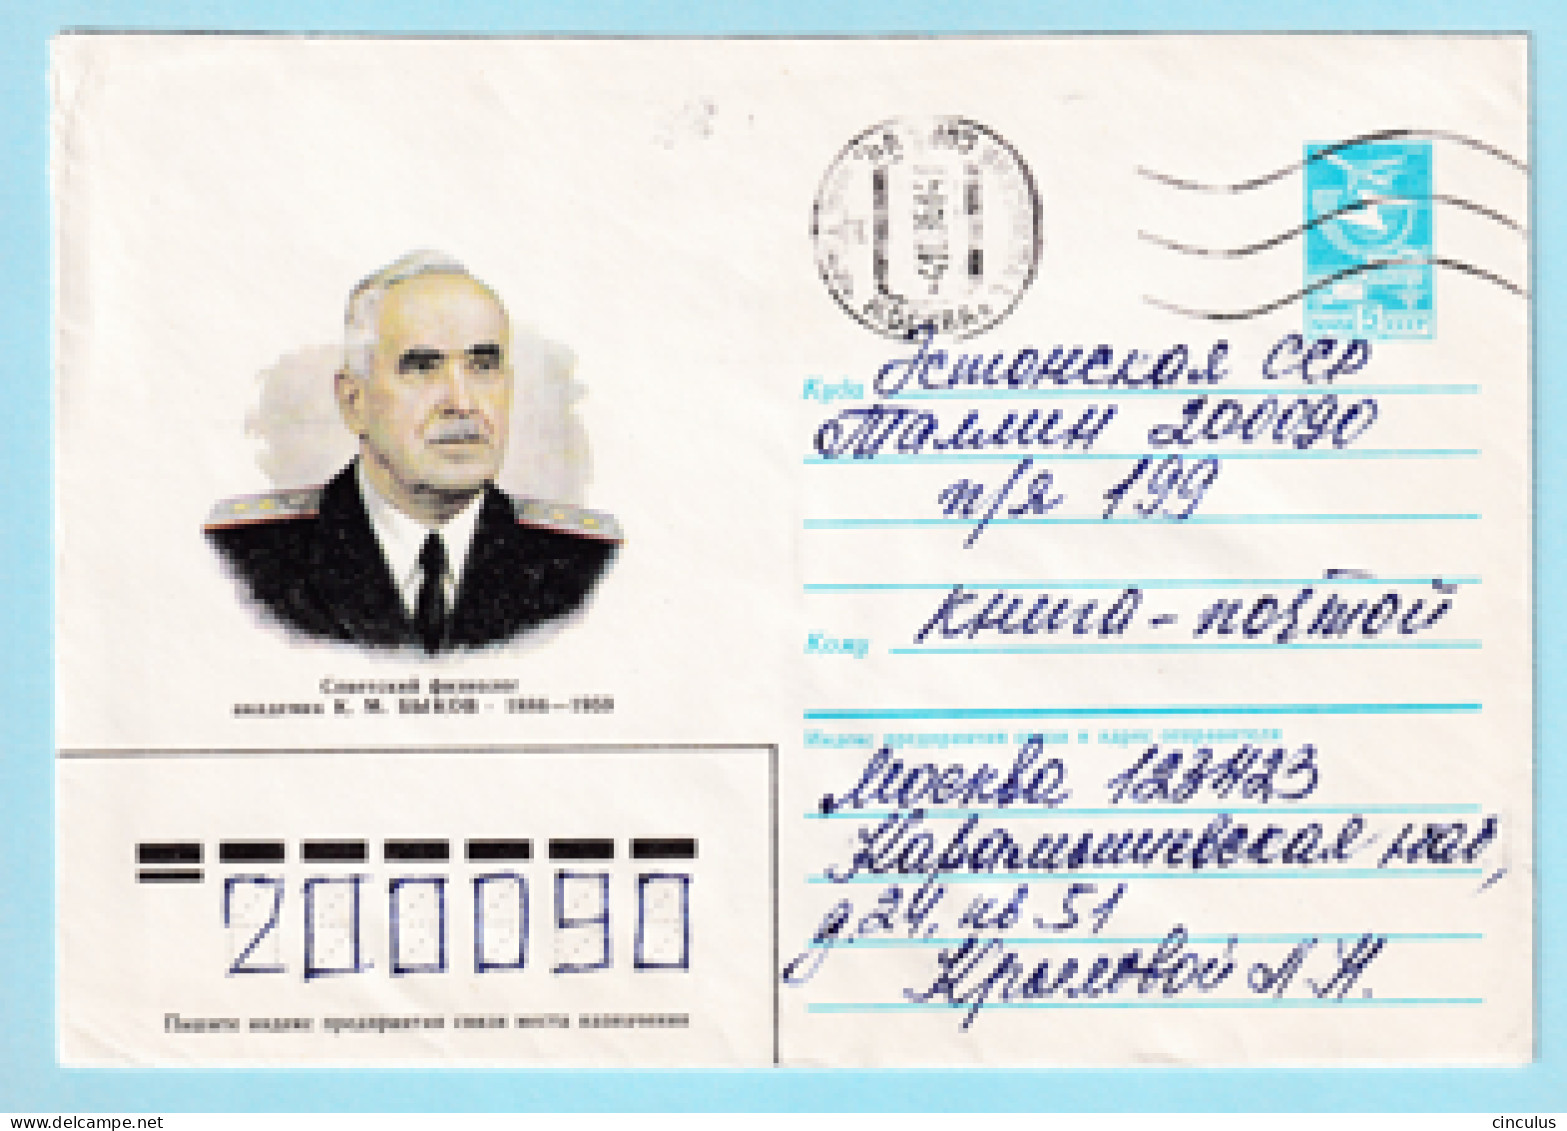 USSR 1985.1216. K.Bykov (1886-1959), Physiologist. Prestamped Cover, Used - 1980-91